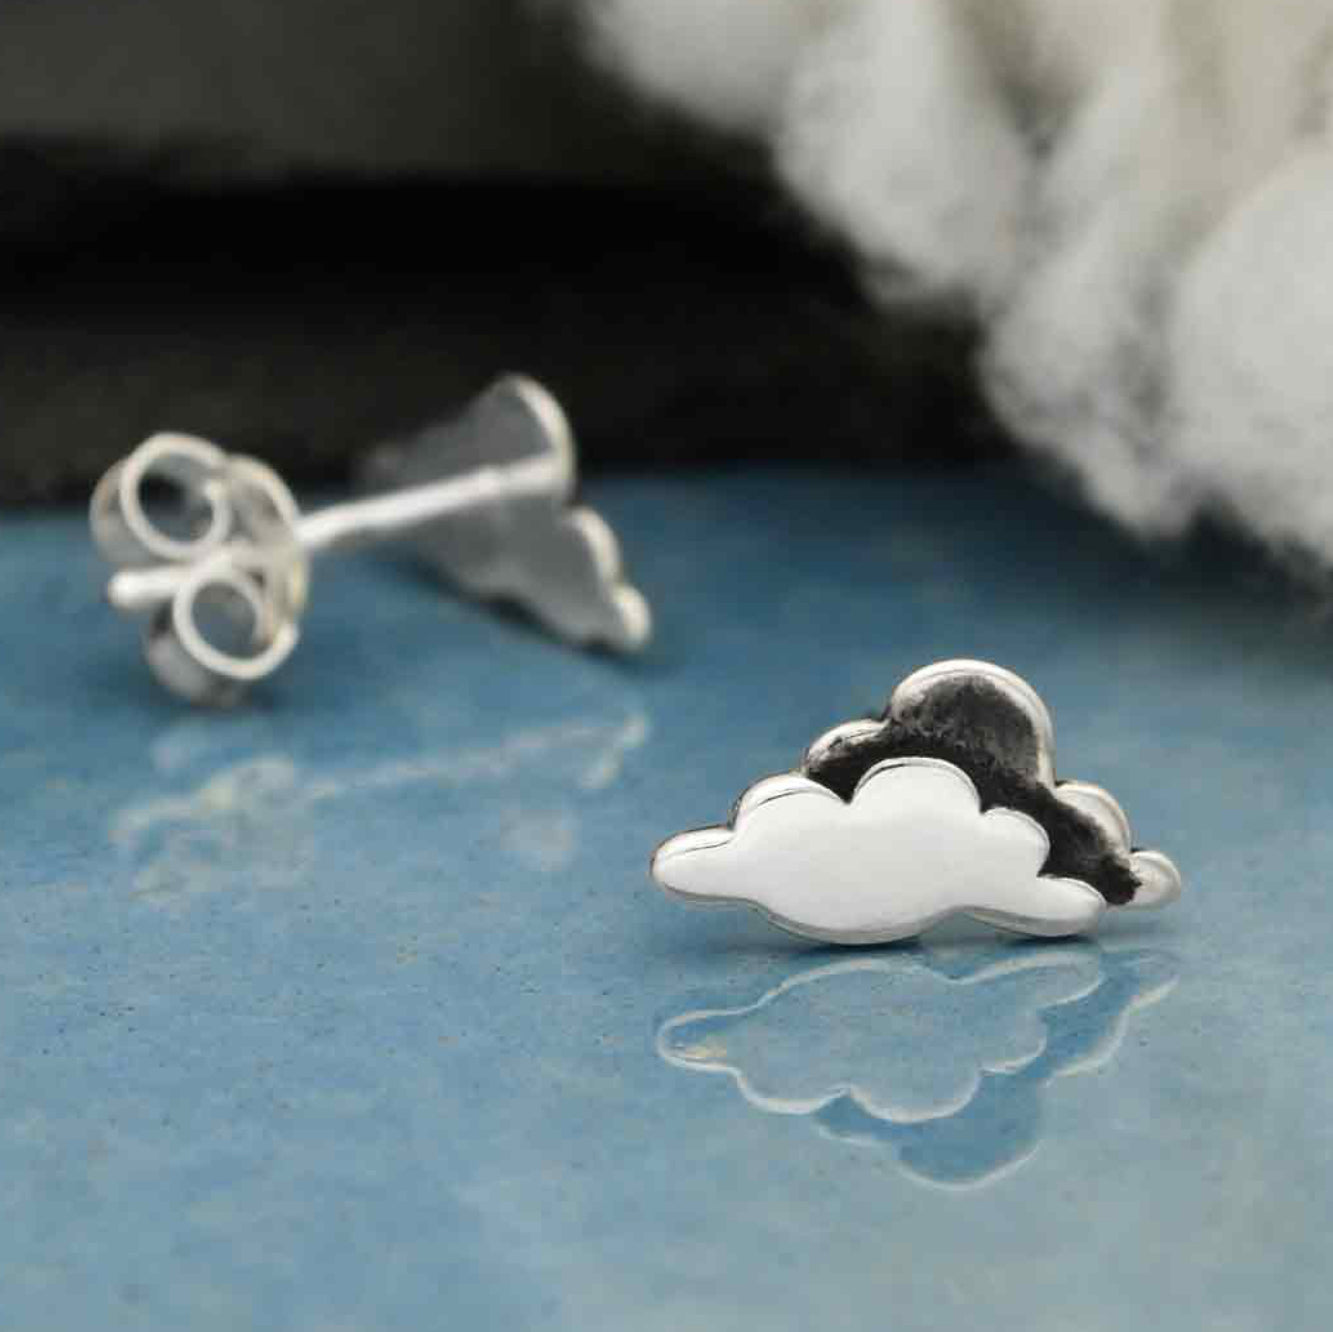 Nina Designs "Cloud" Earrings